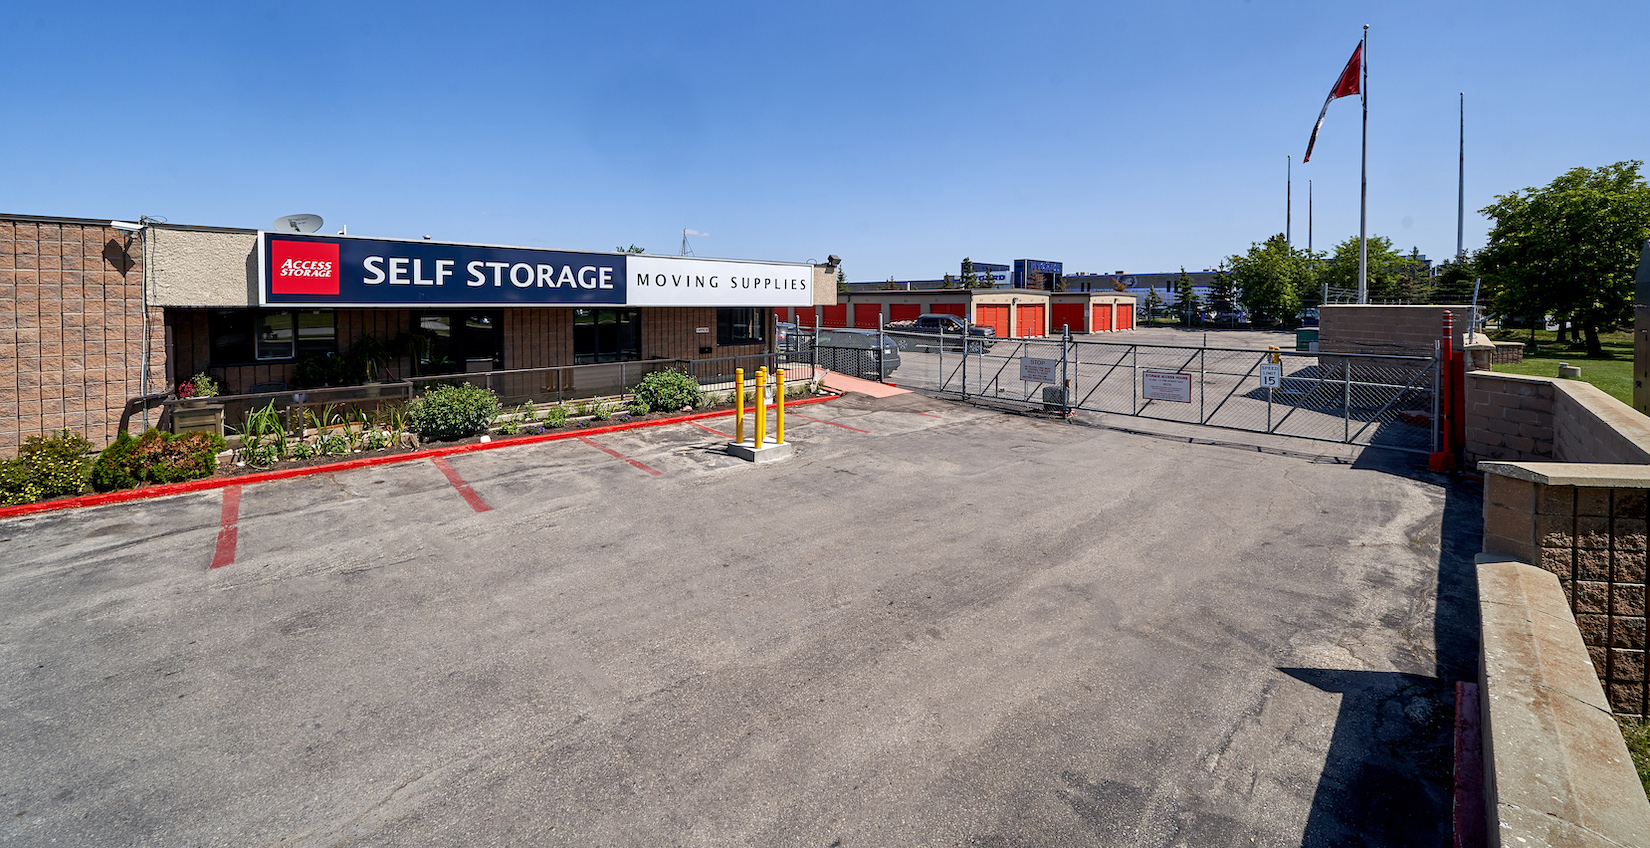 Access Storage - Winnipeg North Winnipeg (204)900-8627